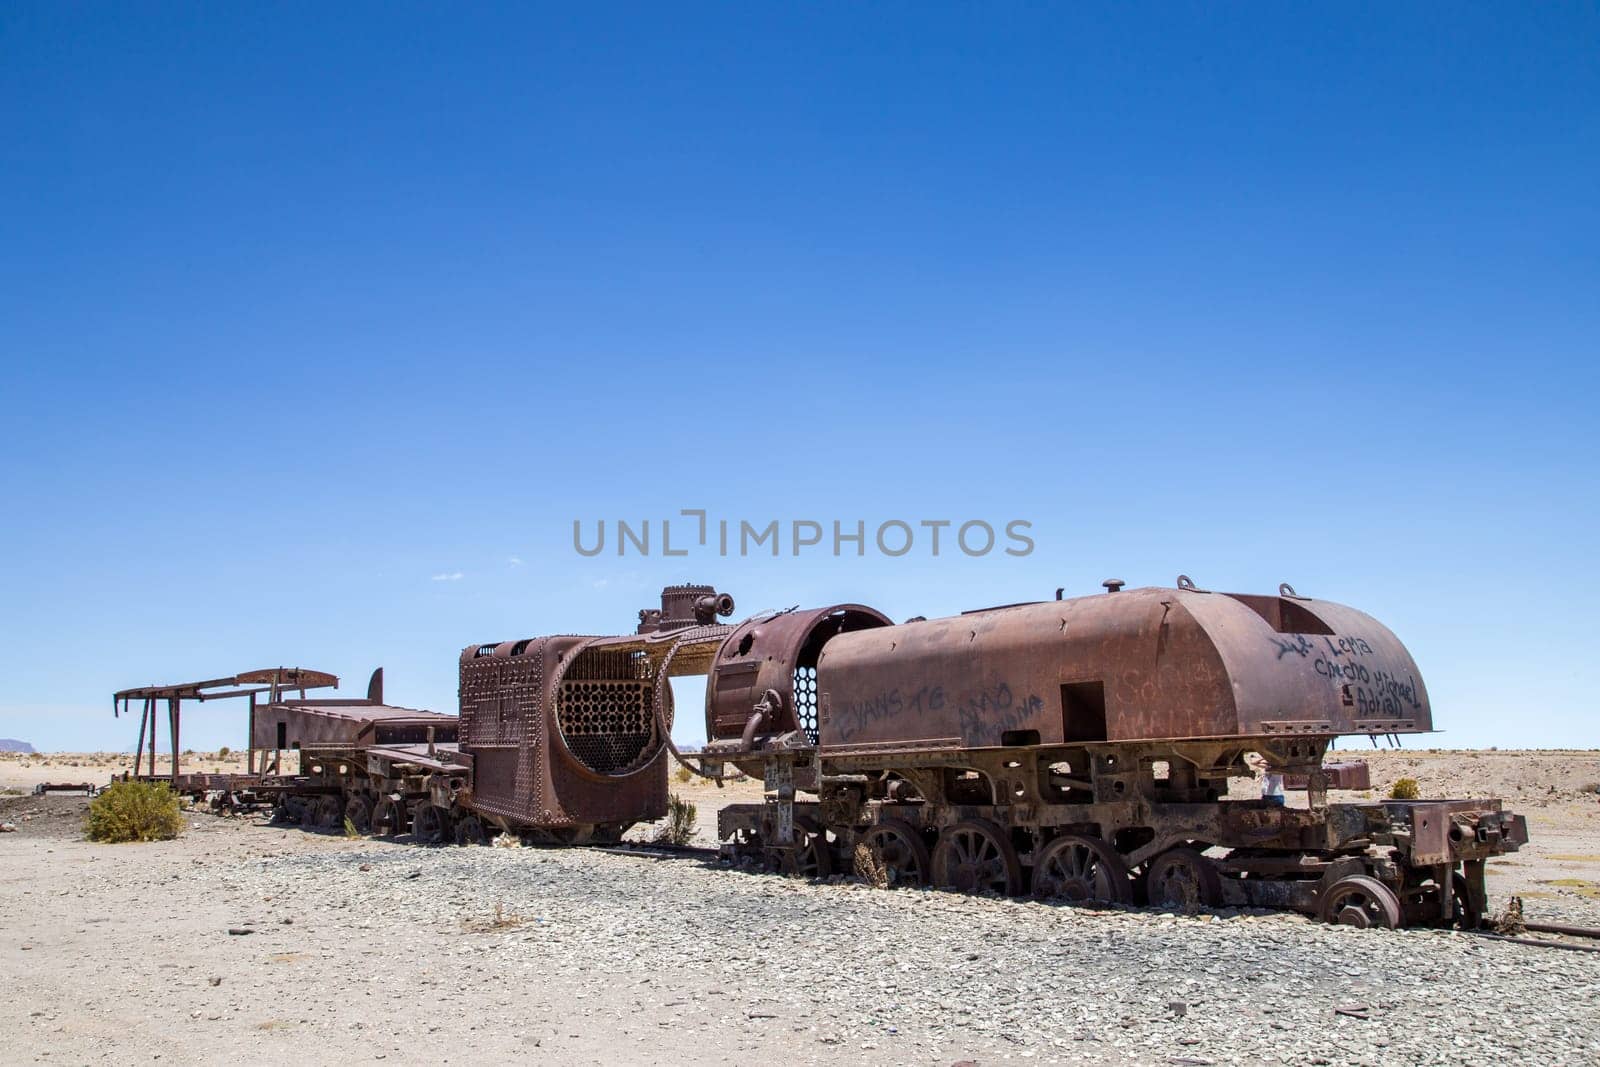 Train Cemetery in Uyuni, Bolivia by oliverfoerstner